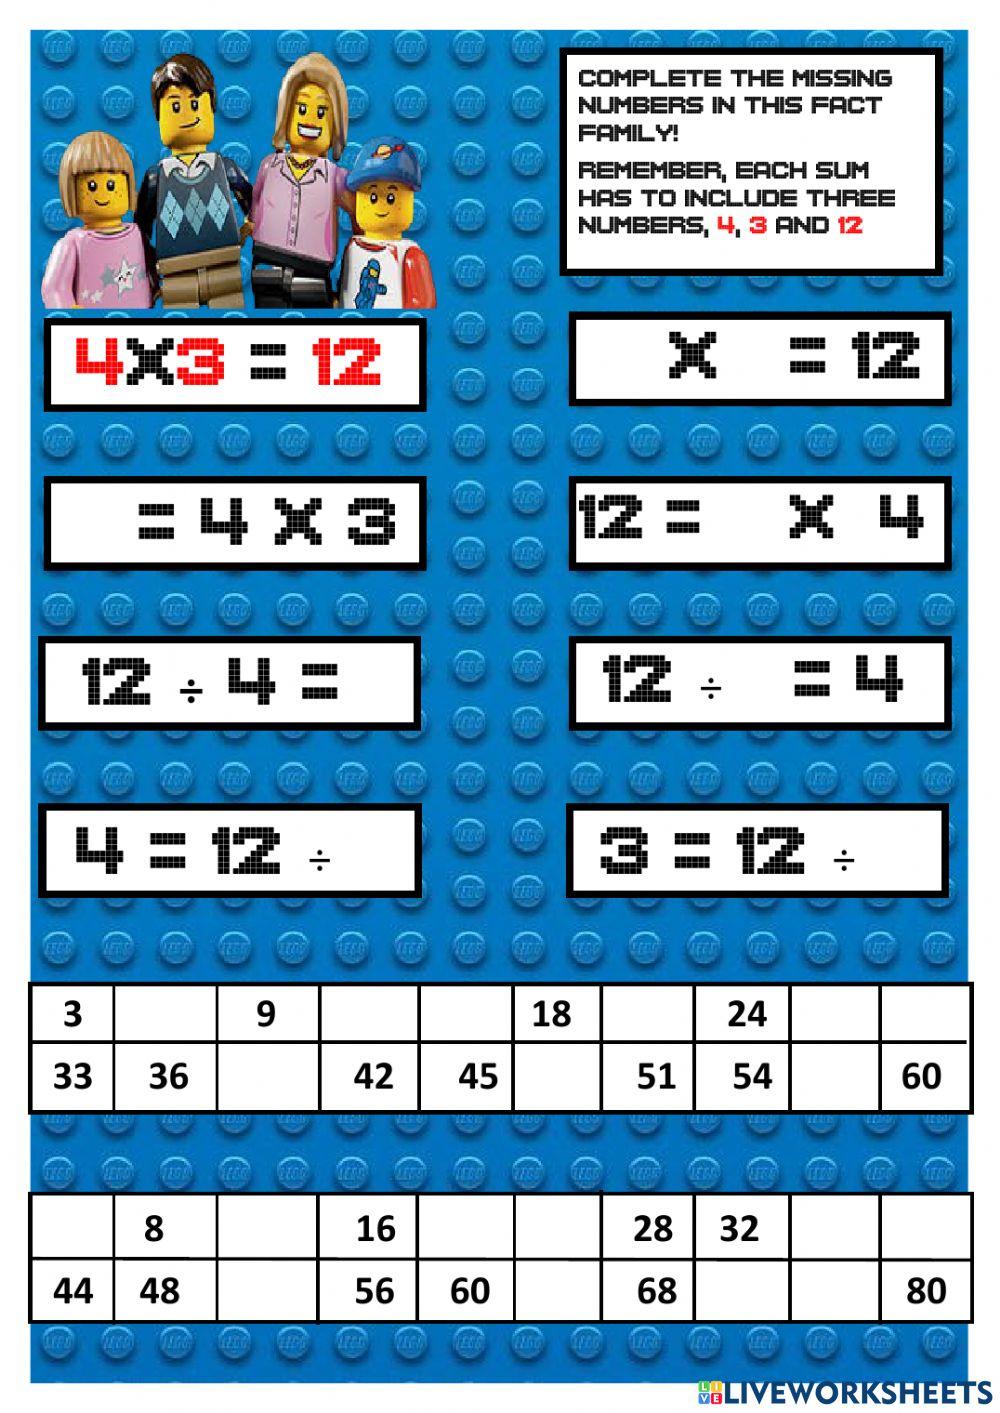 Multiplication Practice